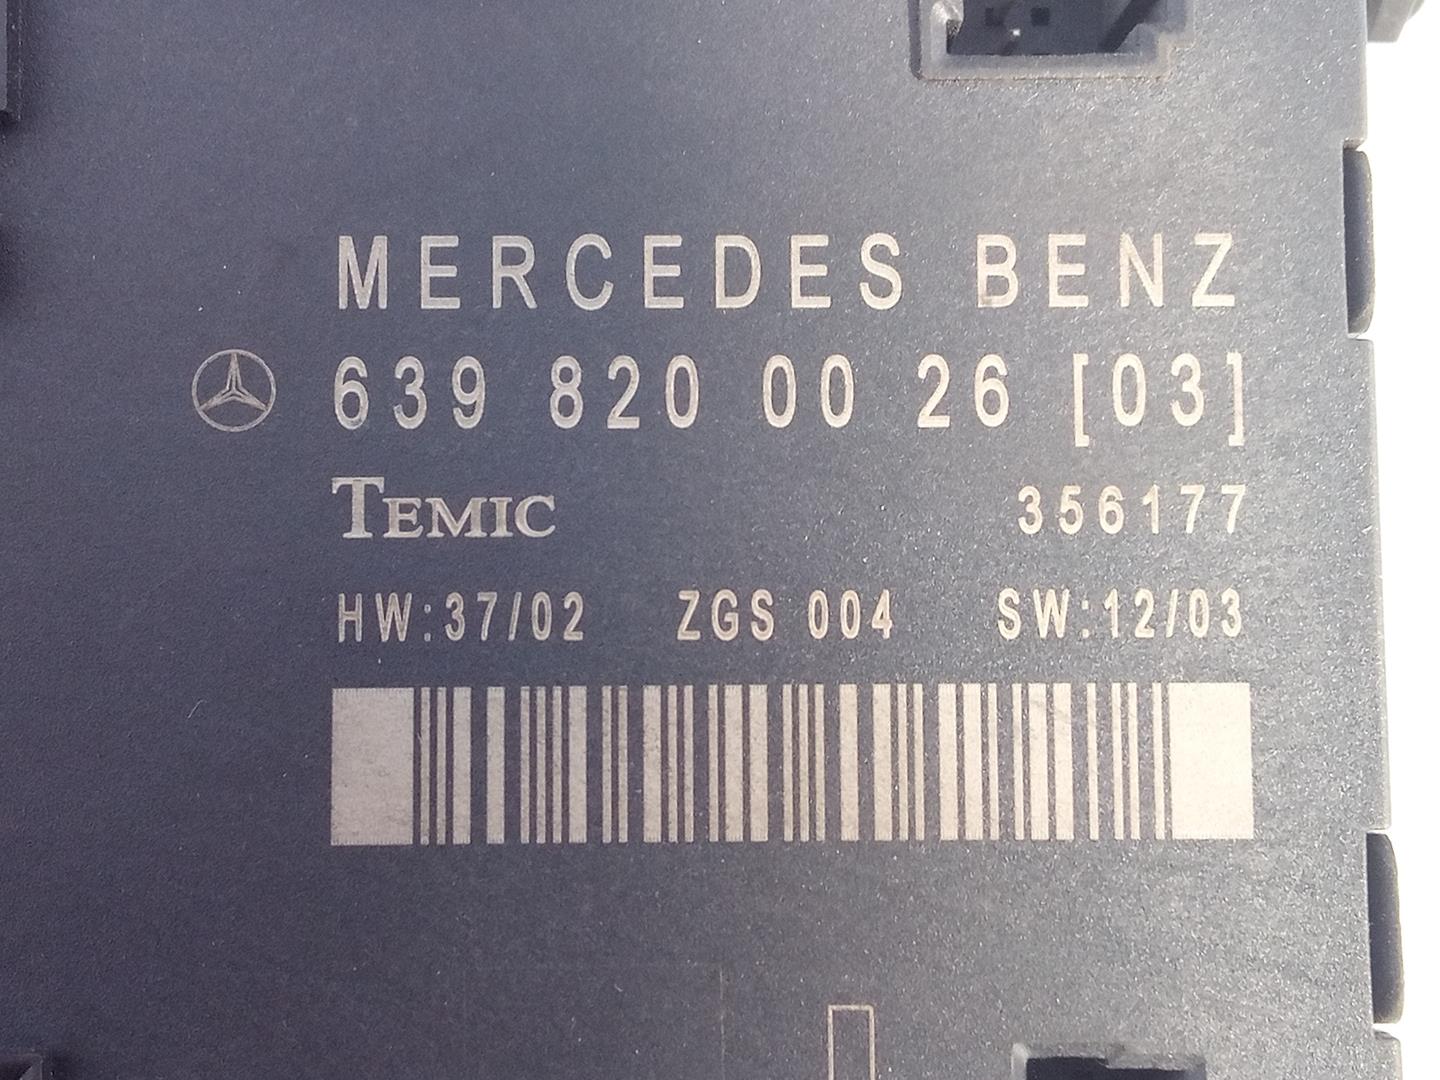 MERCEDES-BENZ Viano W639 (2003-2015) Other Control Units 639820002603, 356177, E3-A1-4-1 24085739